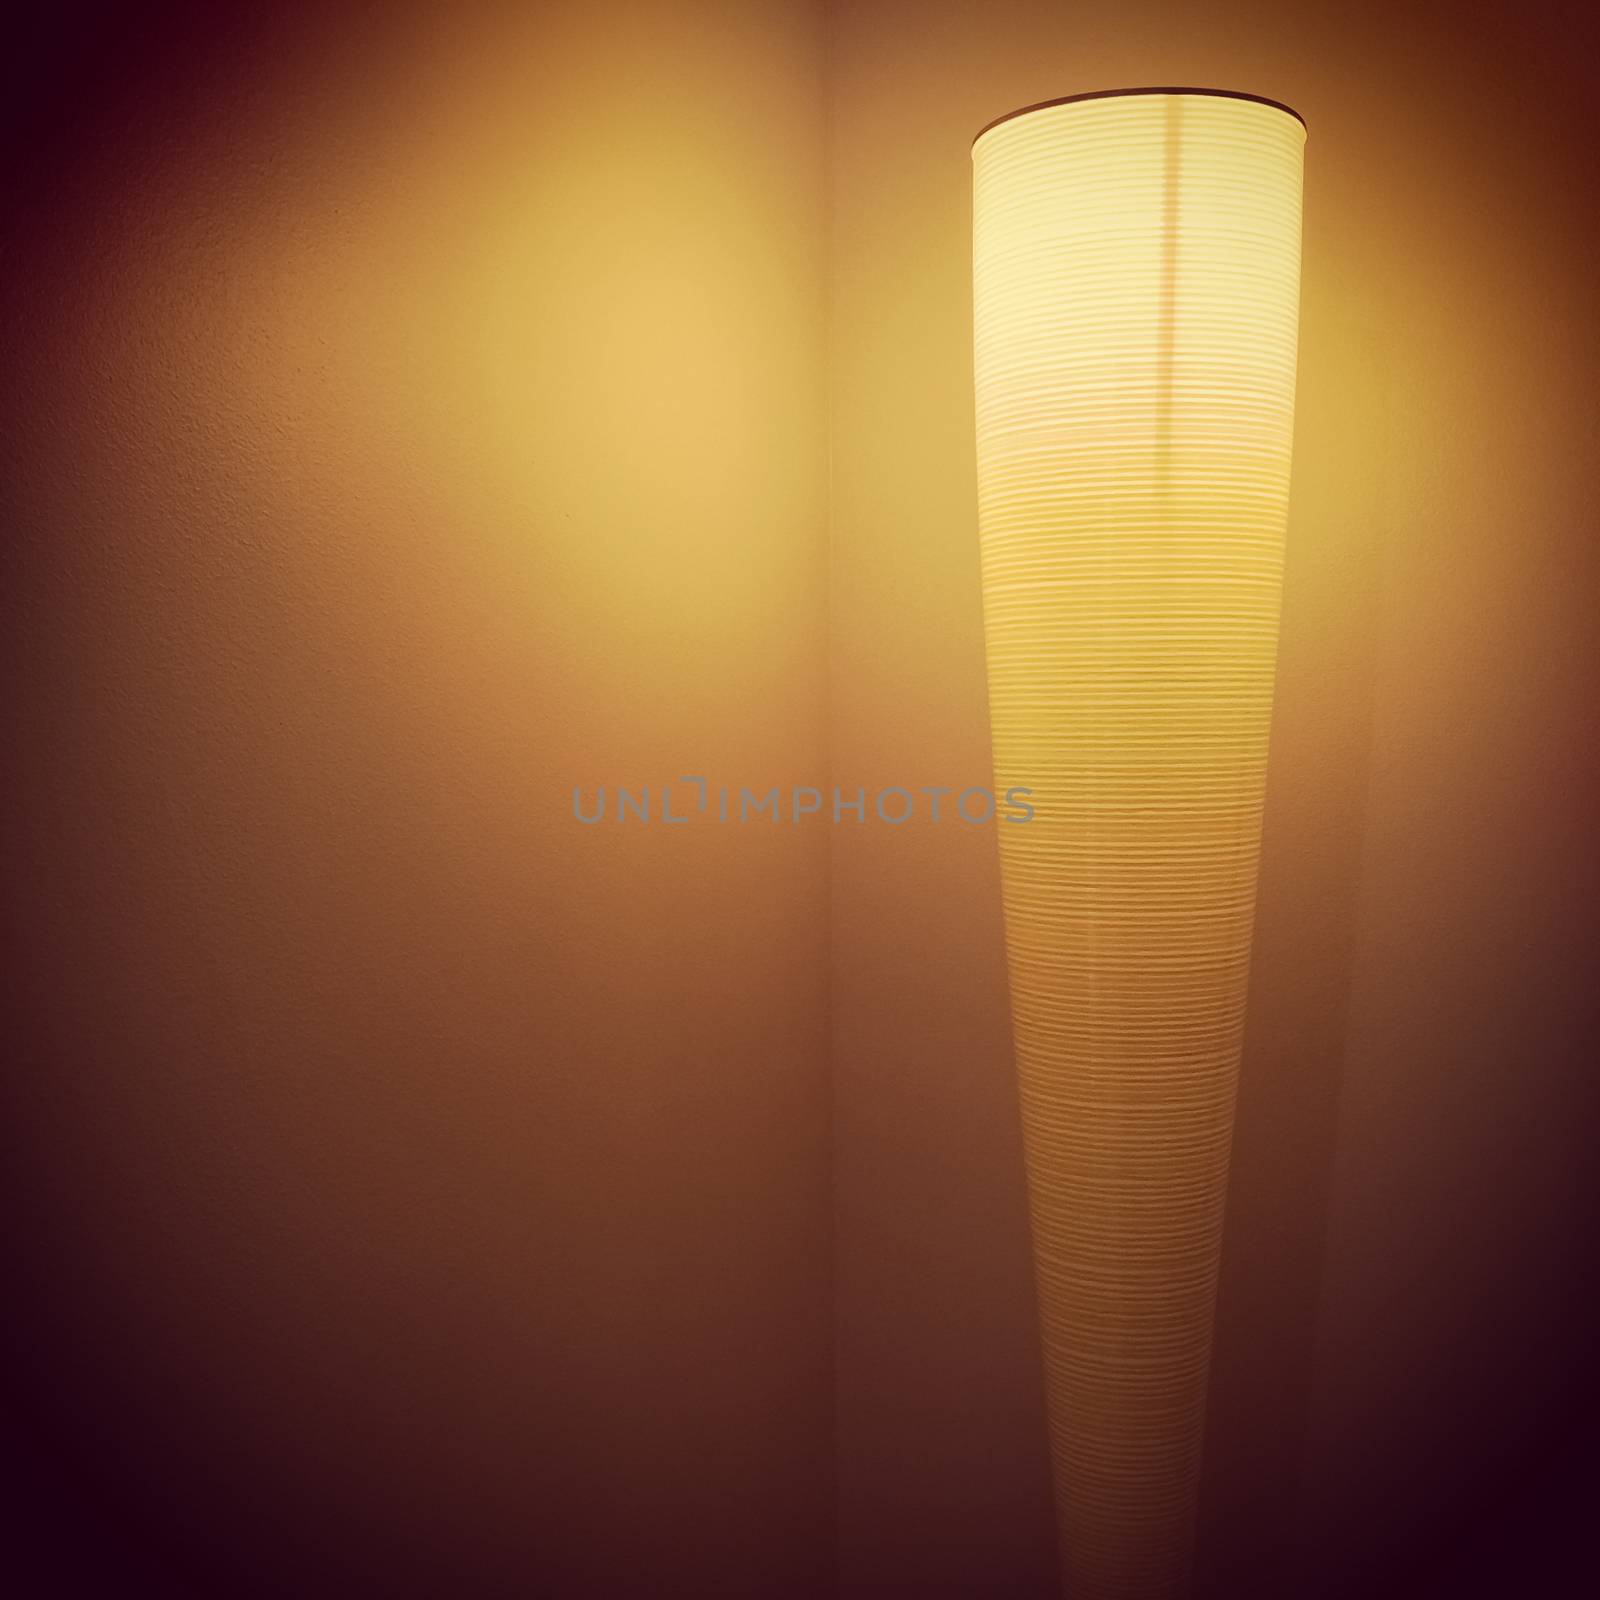 Modern lamp in room corner by anikasalsera